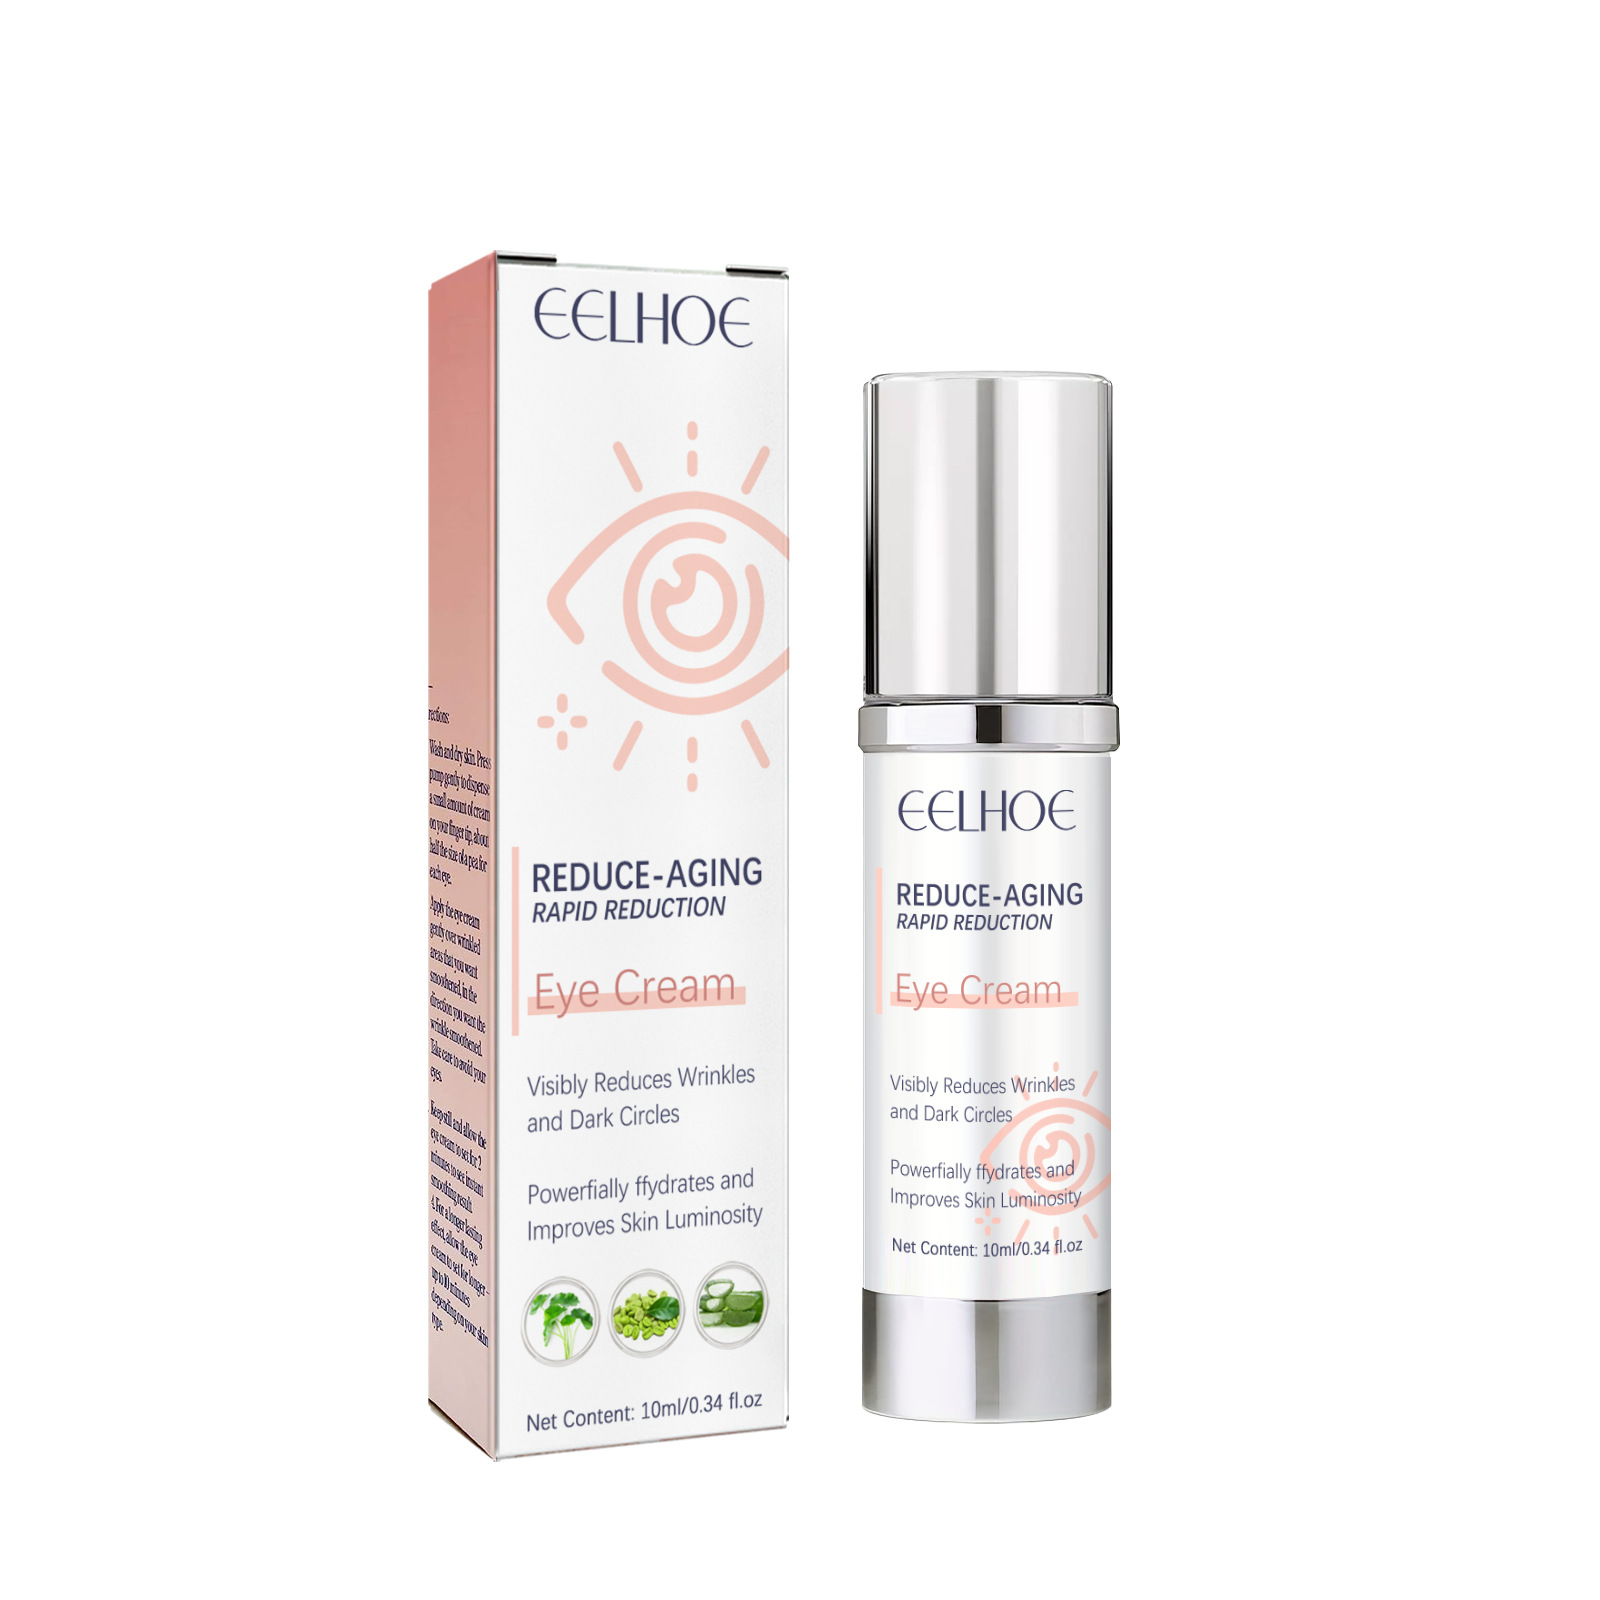 Eelhoe Instant Anti-Wrinkle Eye Cream